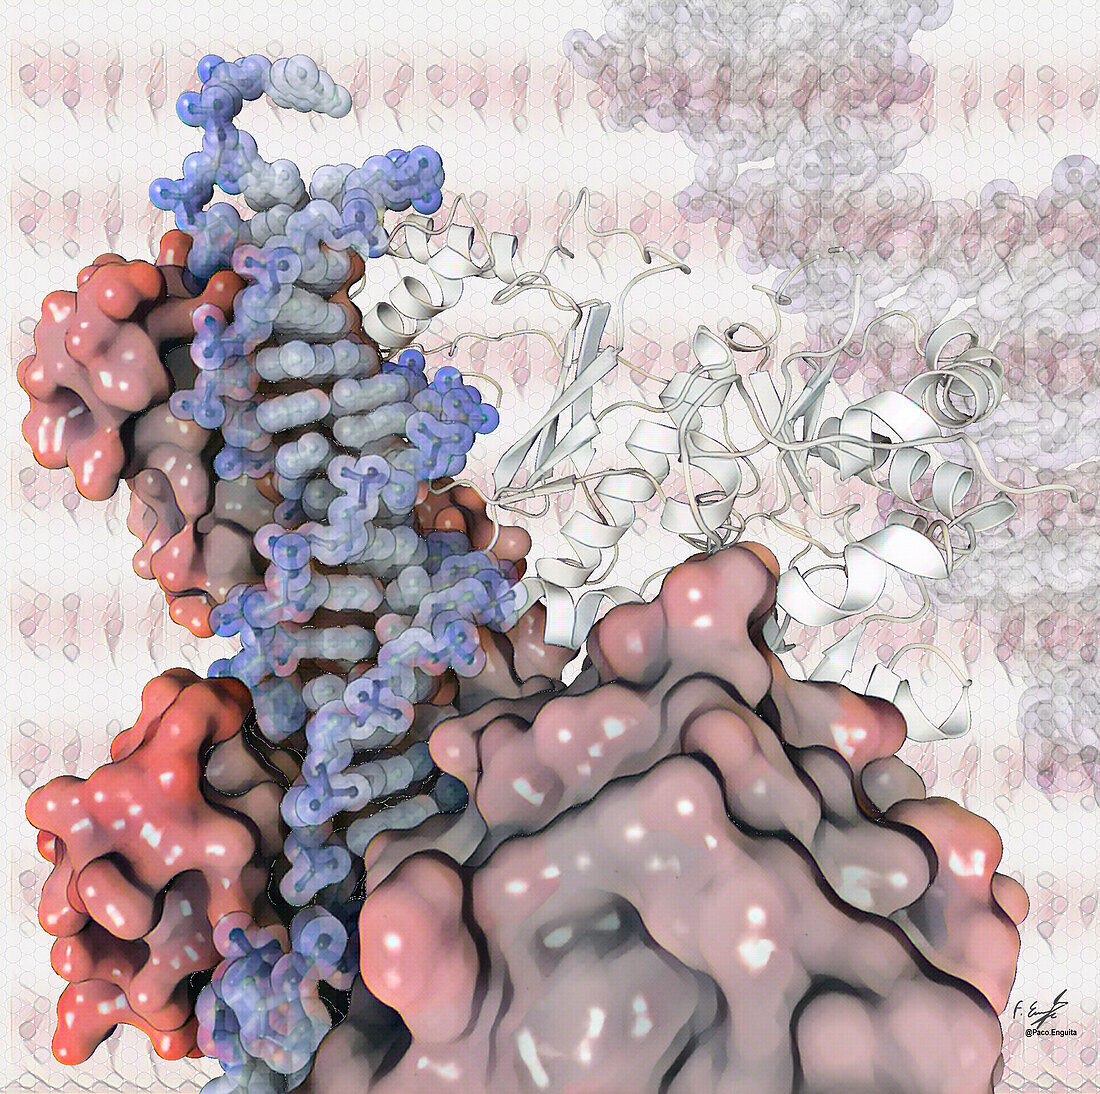 HIV reverse transcription enzyme, illustration